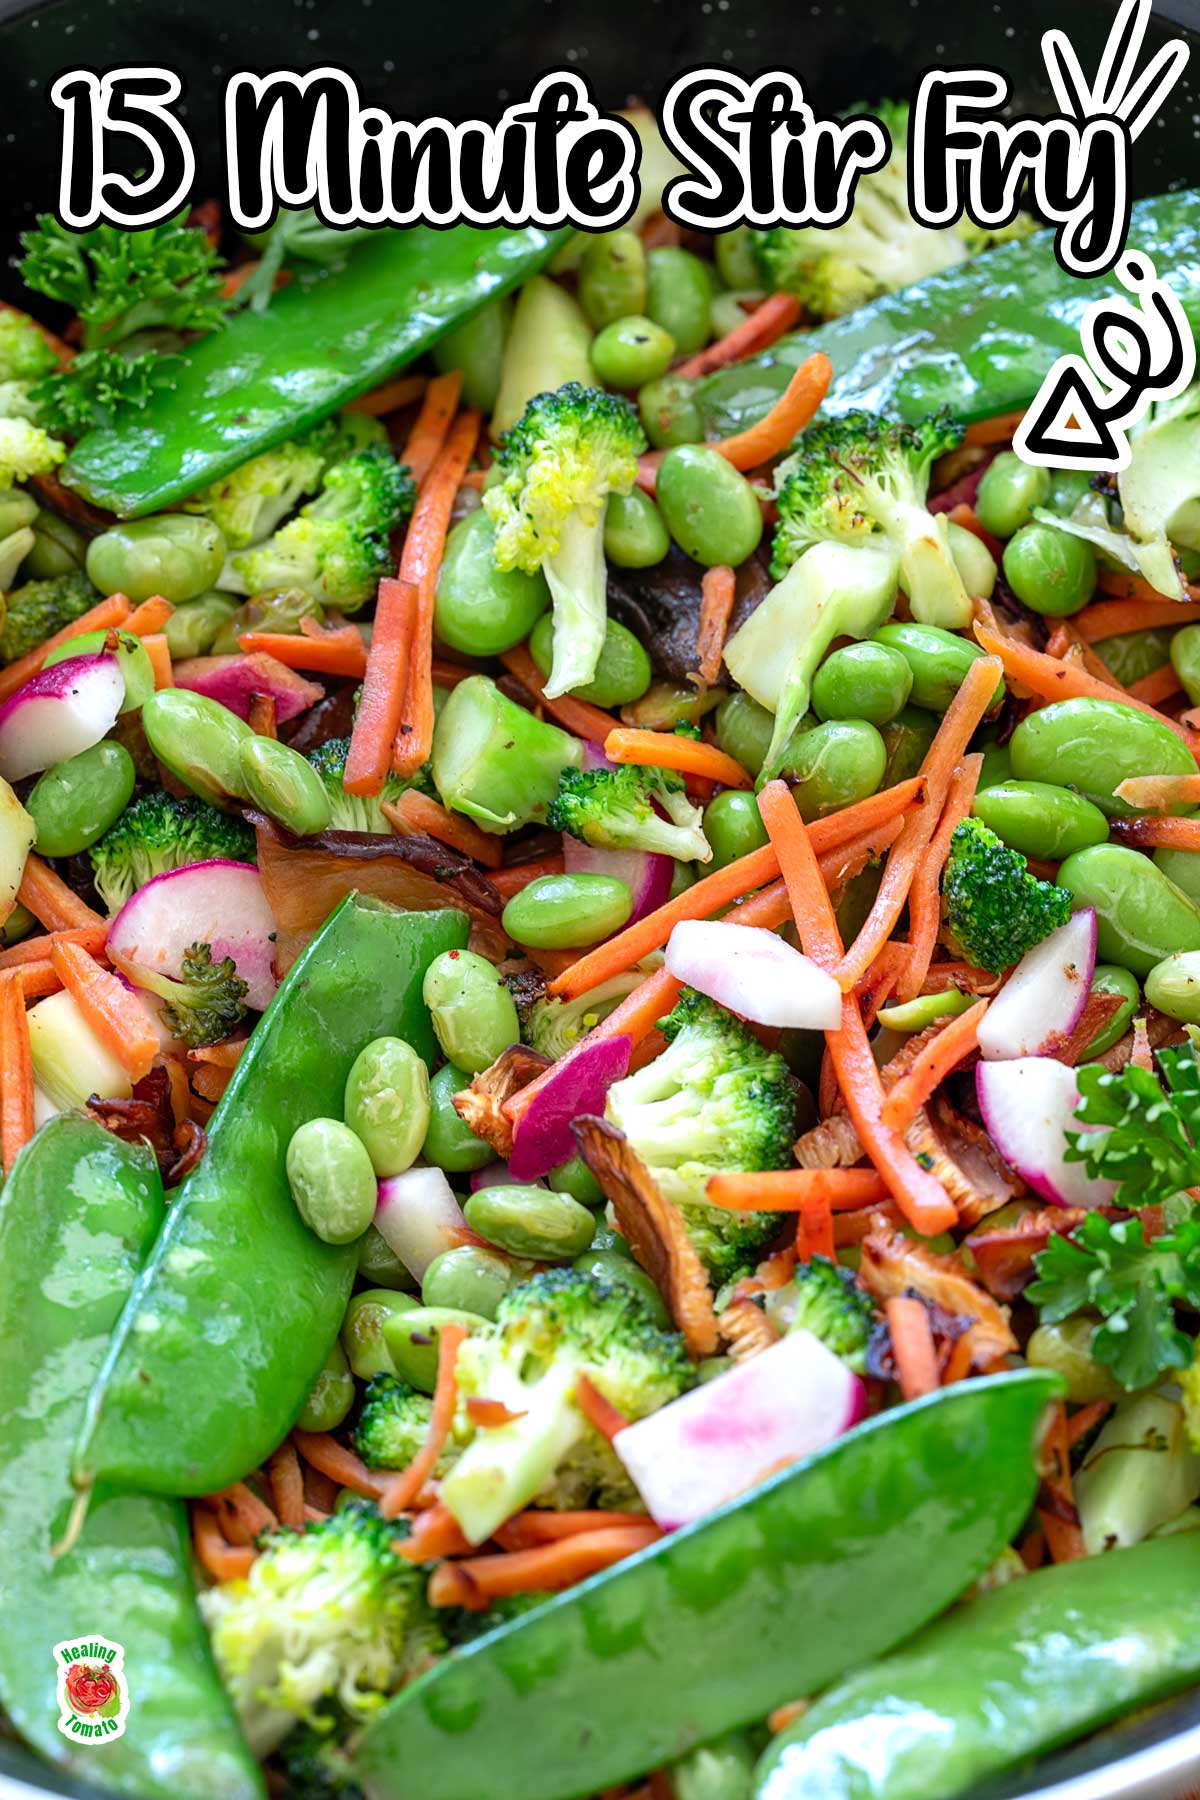 Closeup view of the veggies in a wok